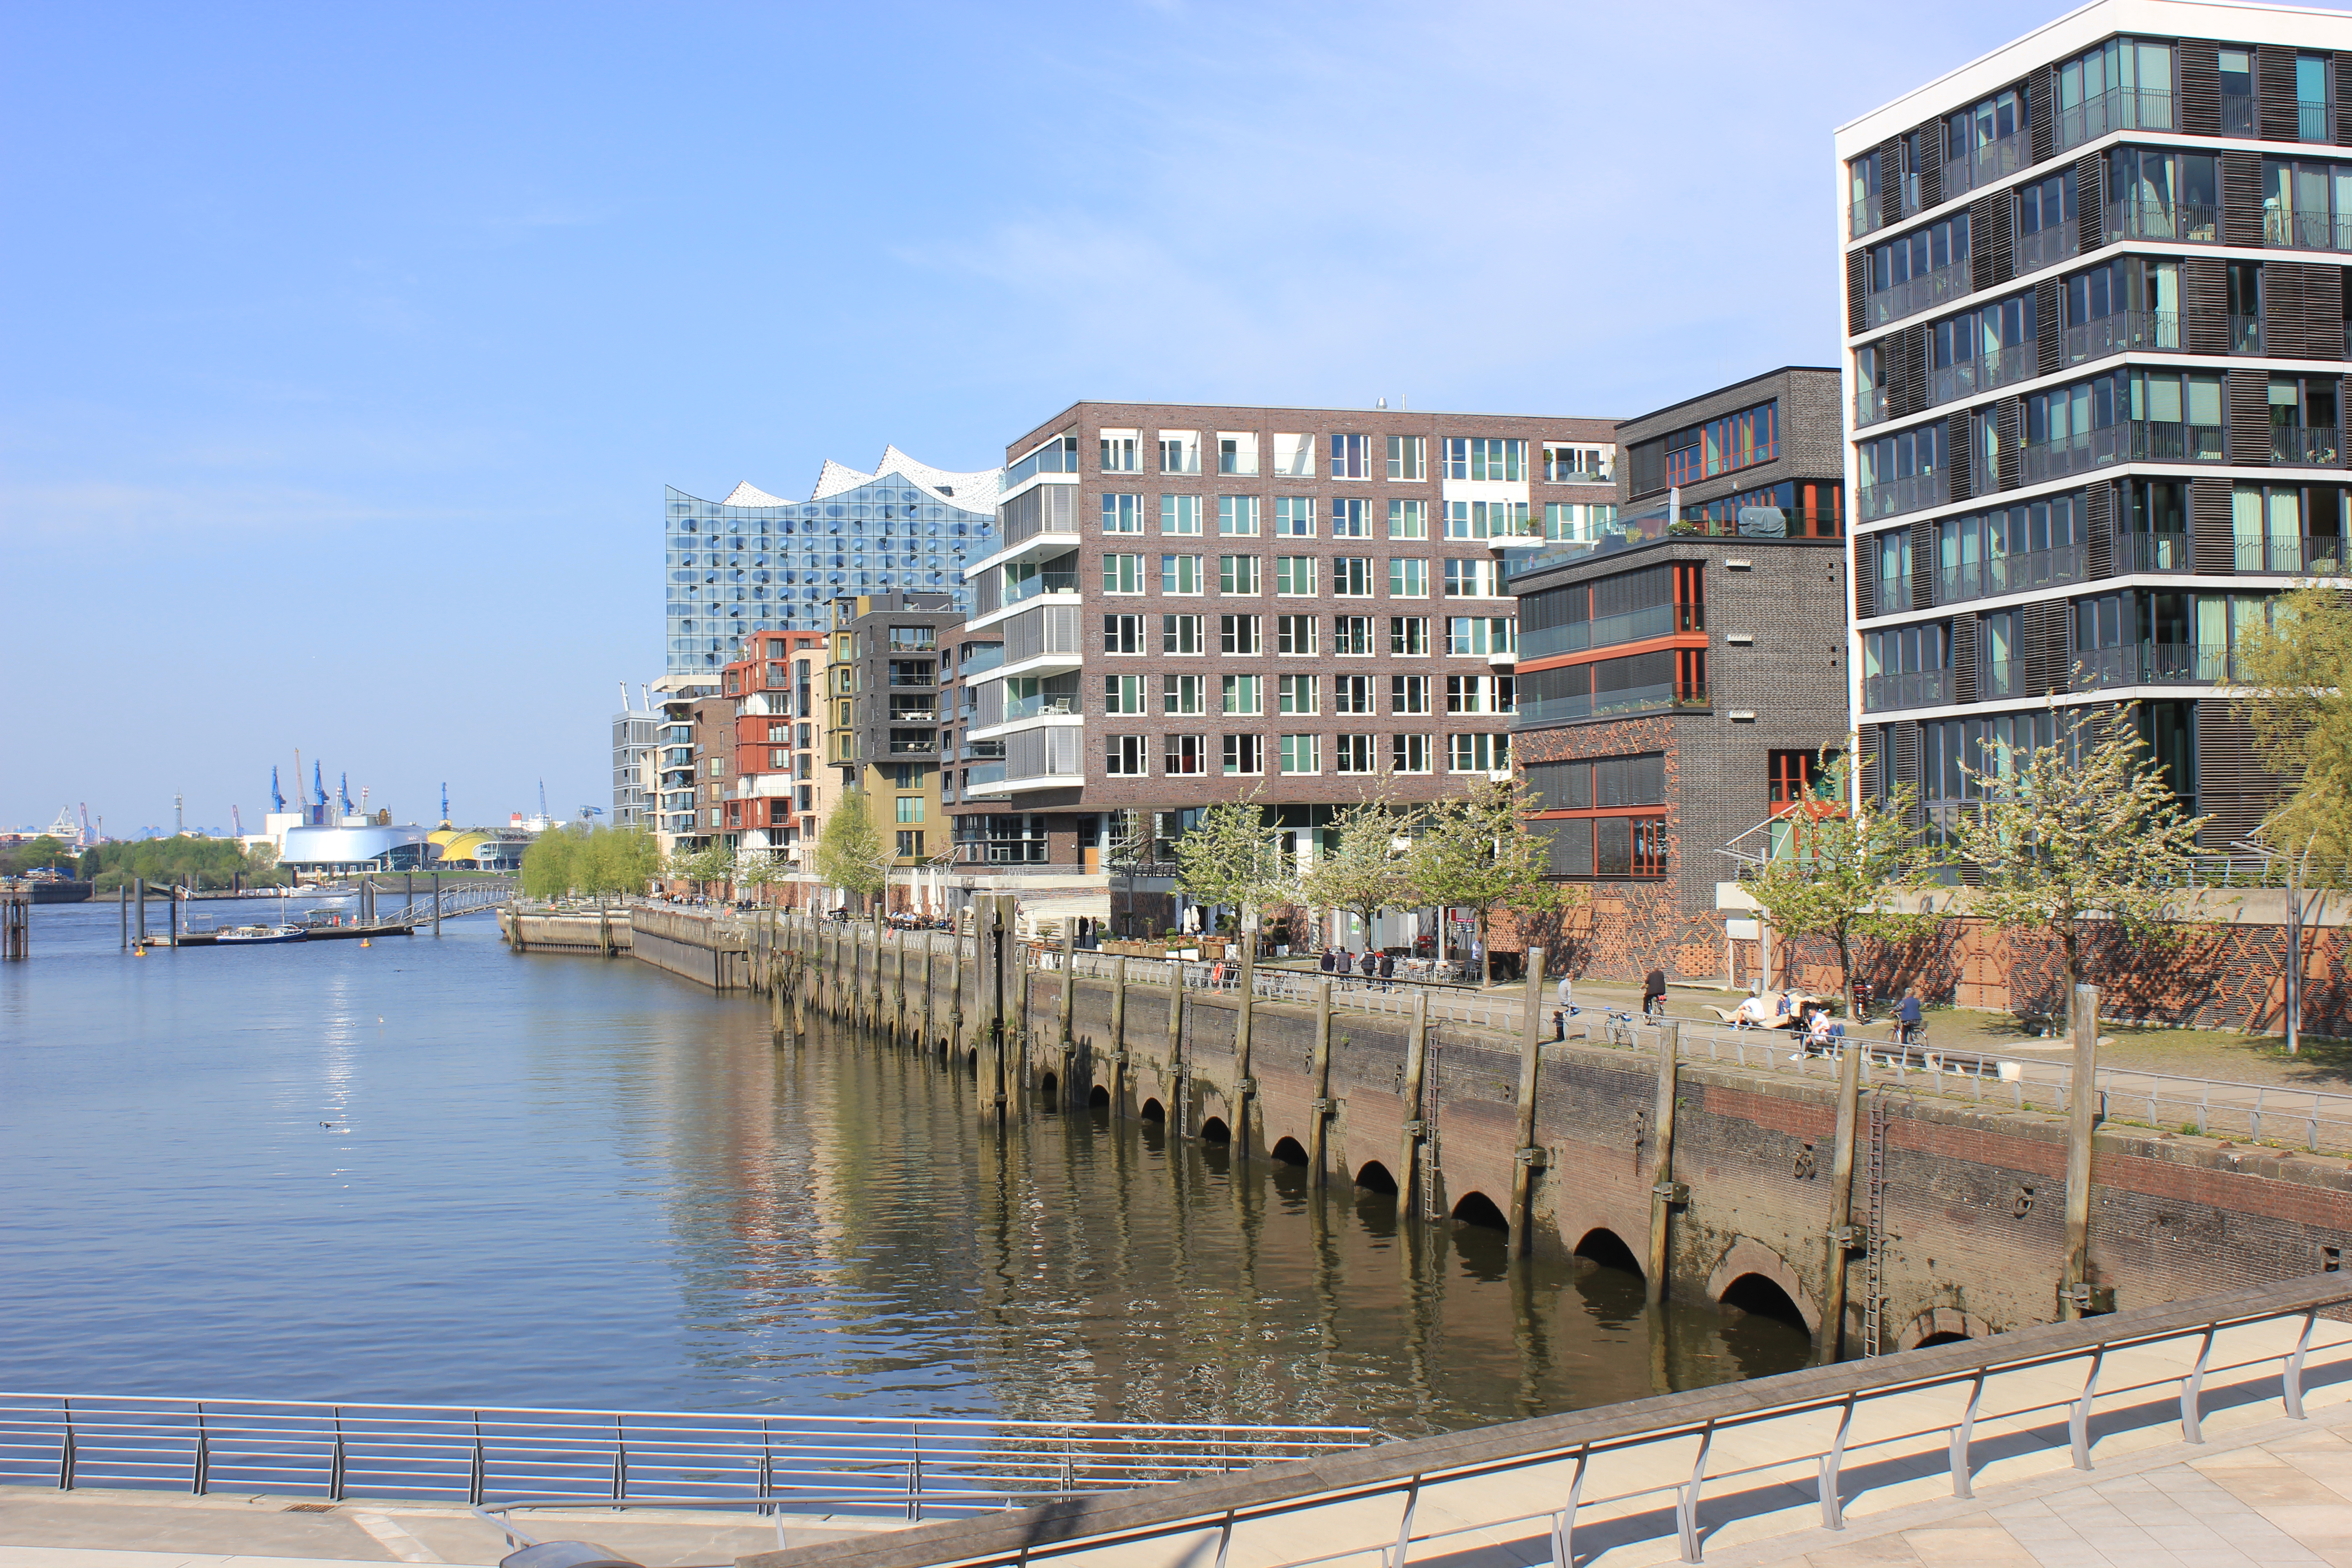  Hamburg  s ambitious HafenCity  Liberal Landscape